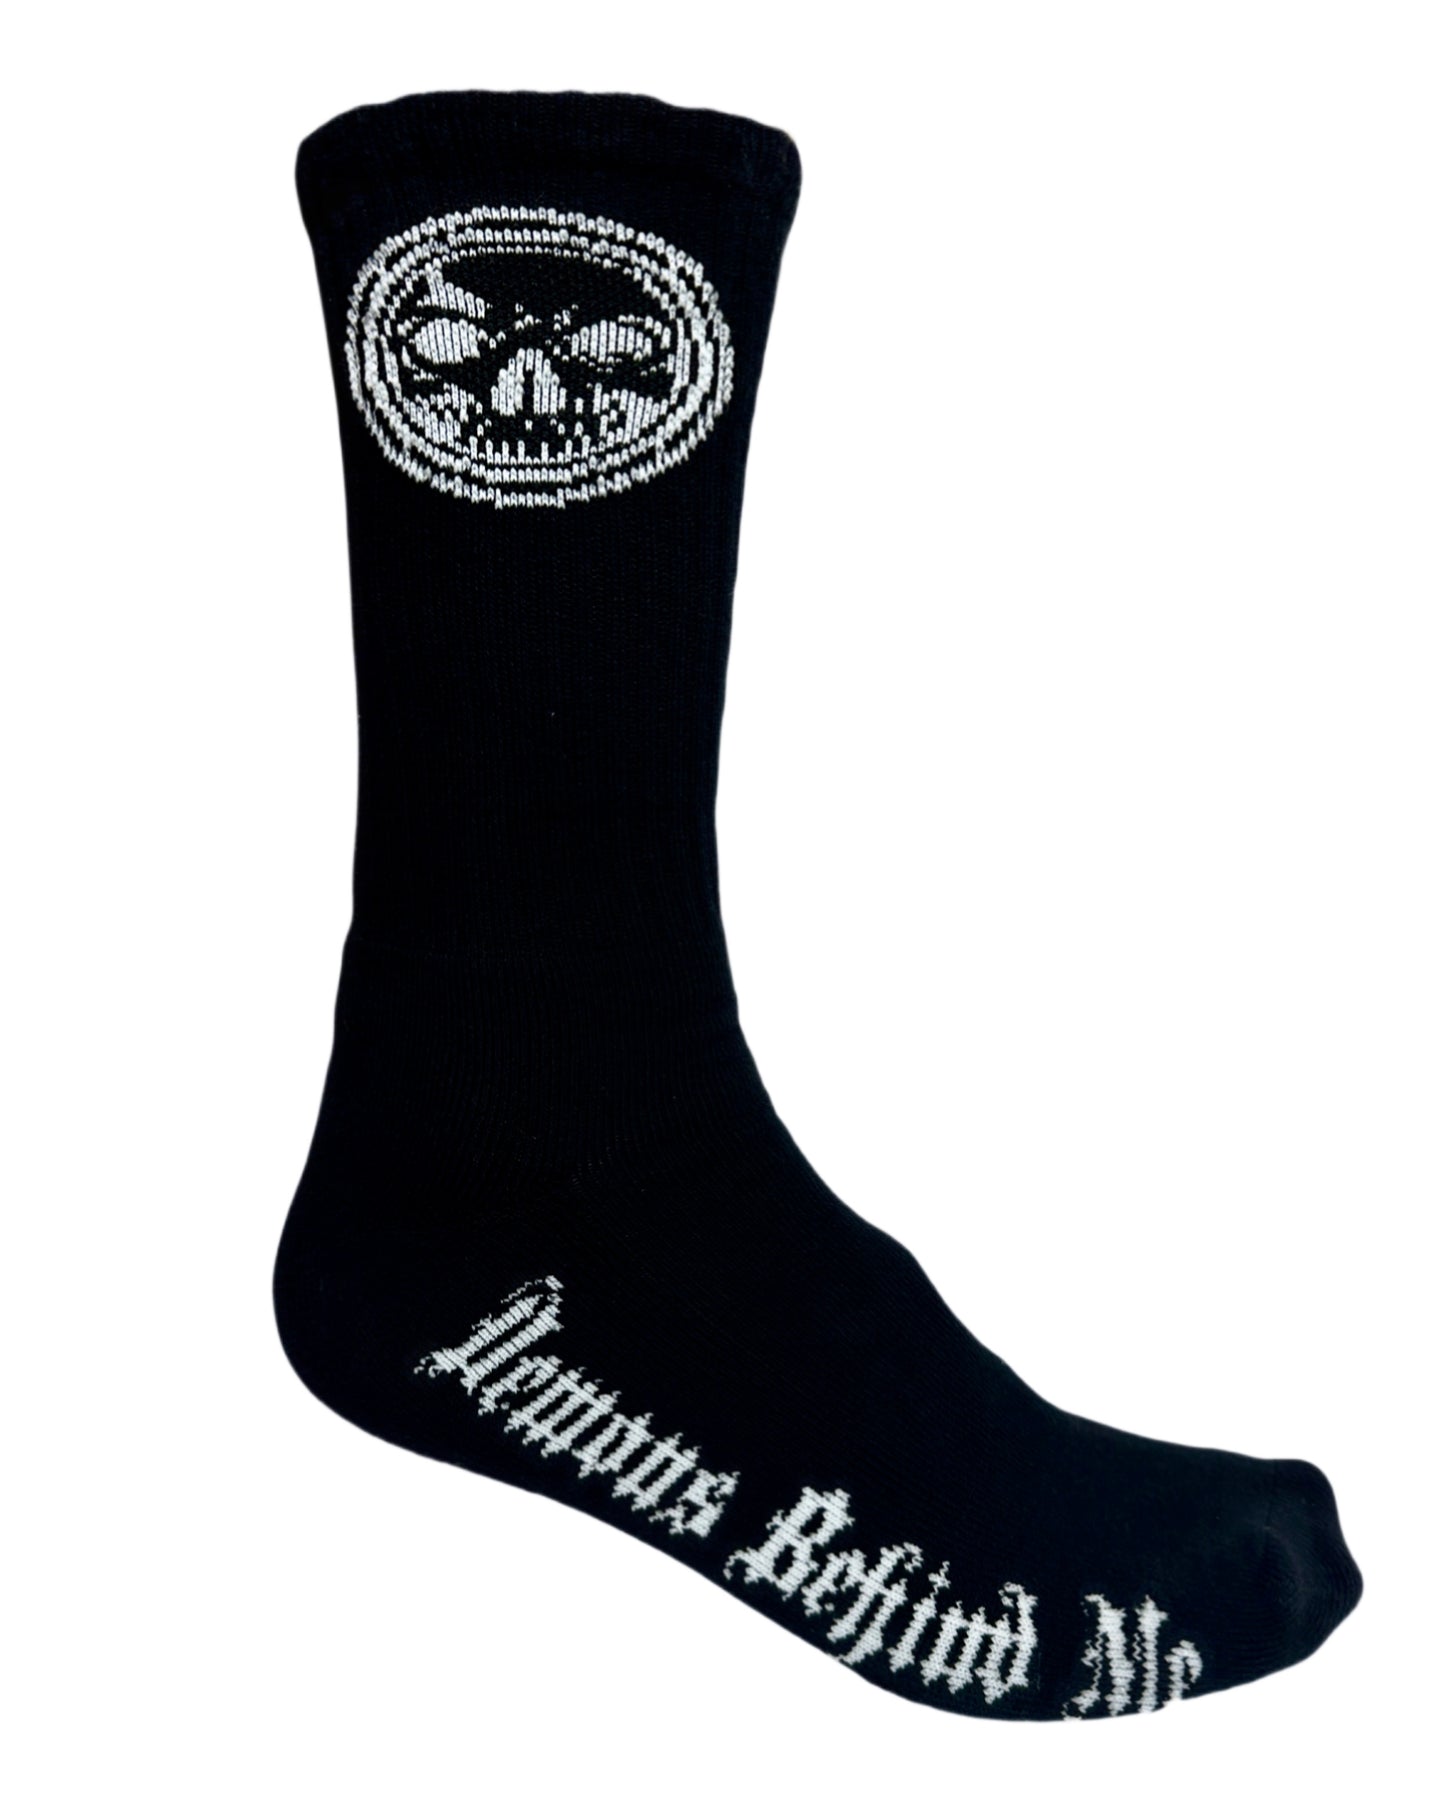 LIMITED EDITION!  Phantom Logo High Performance Athletic Socks (Pair)